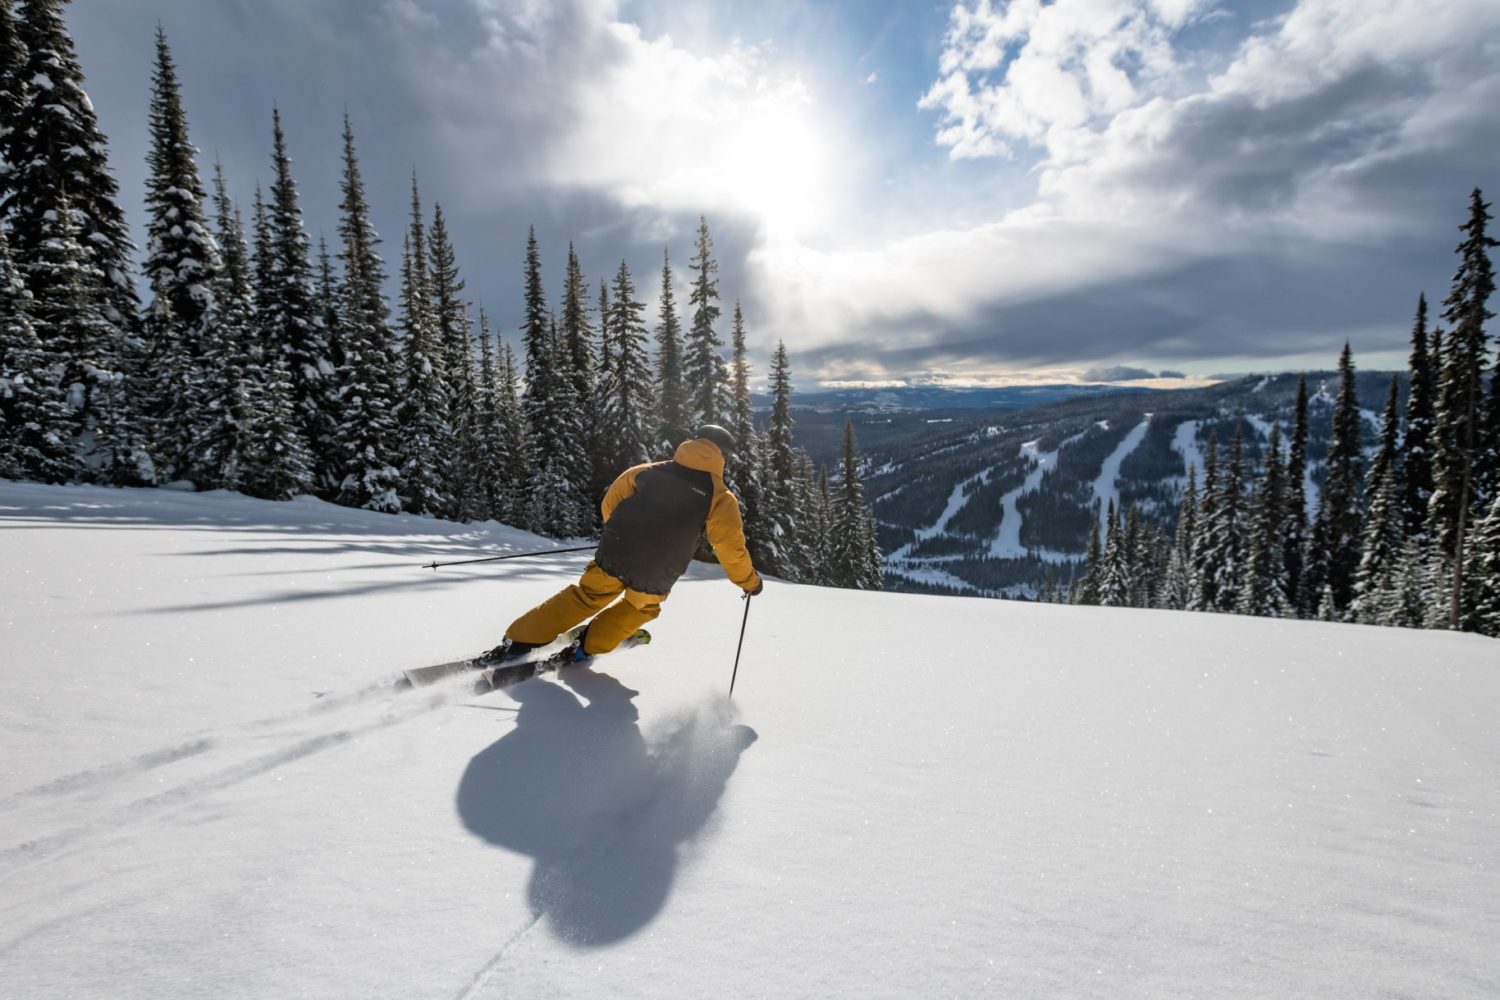 Incredible images of skier at Sun Peaks Ski Resort